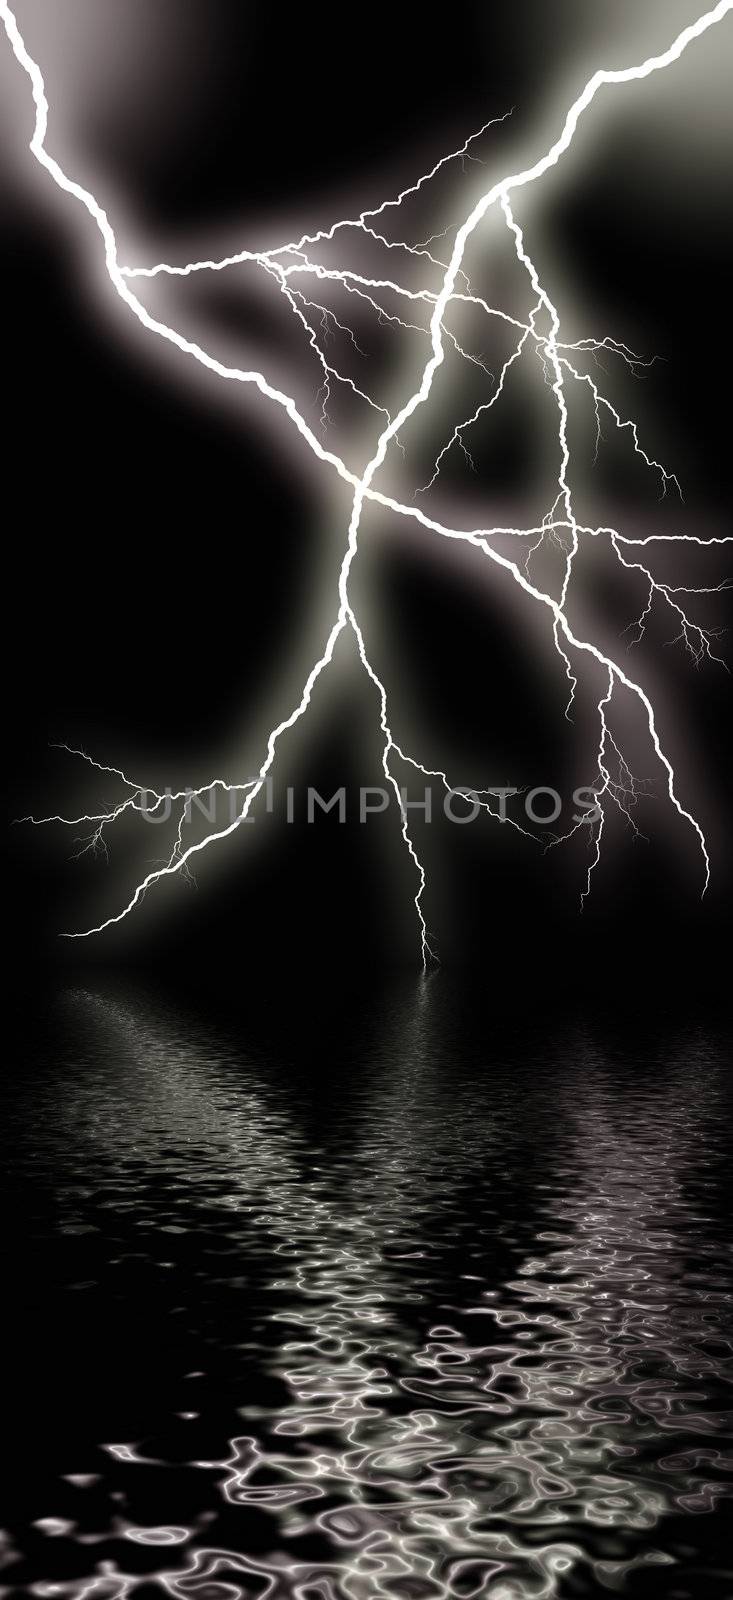 lightning by mettus